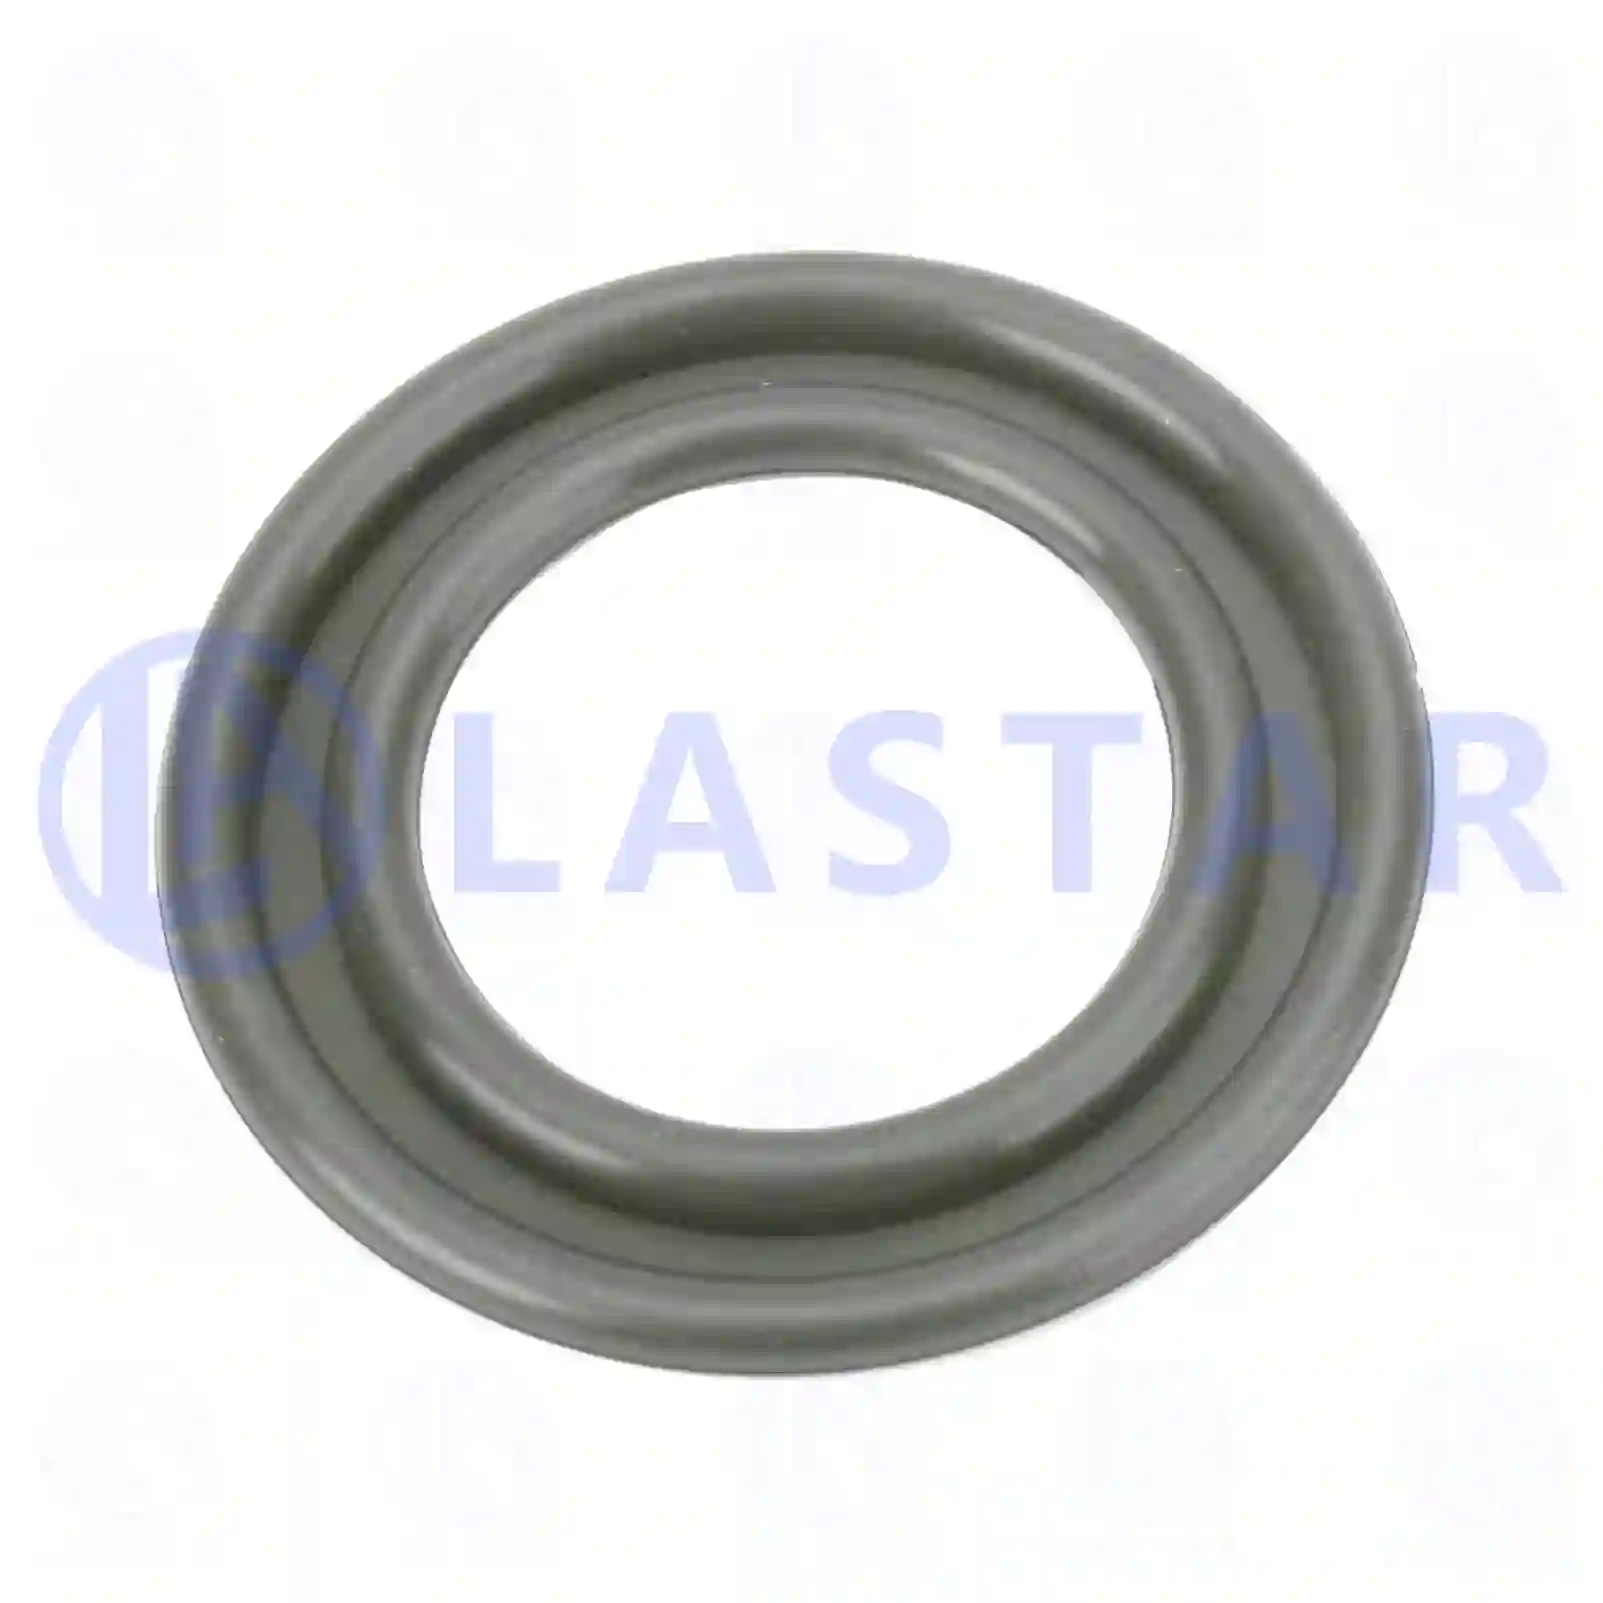 Oil Cooler Seal ring, la no: 77700825 ,  oem no:7401677516, 7420551483, 1677516, 20551483, ZG02009-0008 Lastar Spare Part | Truck Spare Parts, Auotomotive Spare Parts